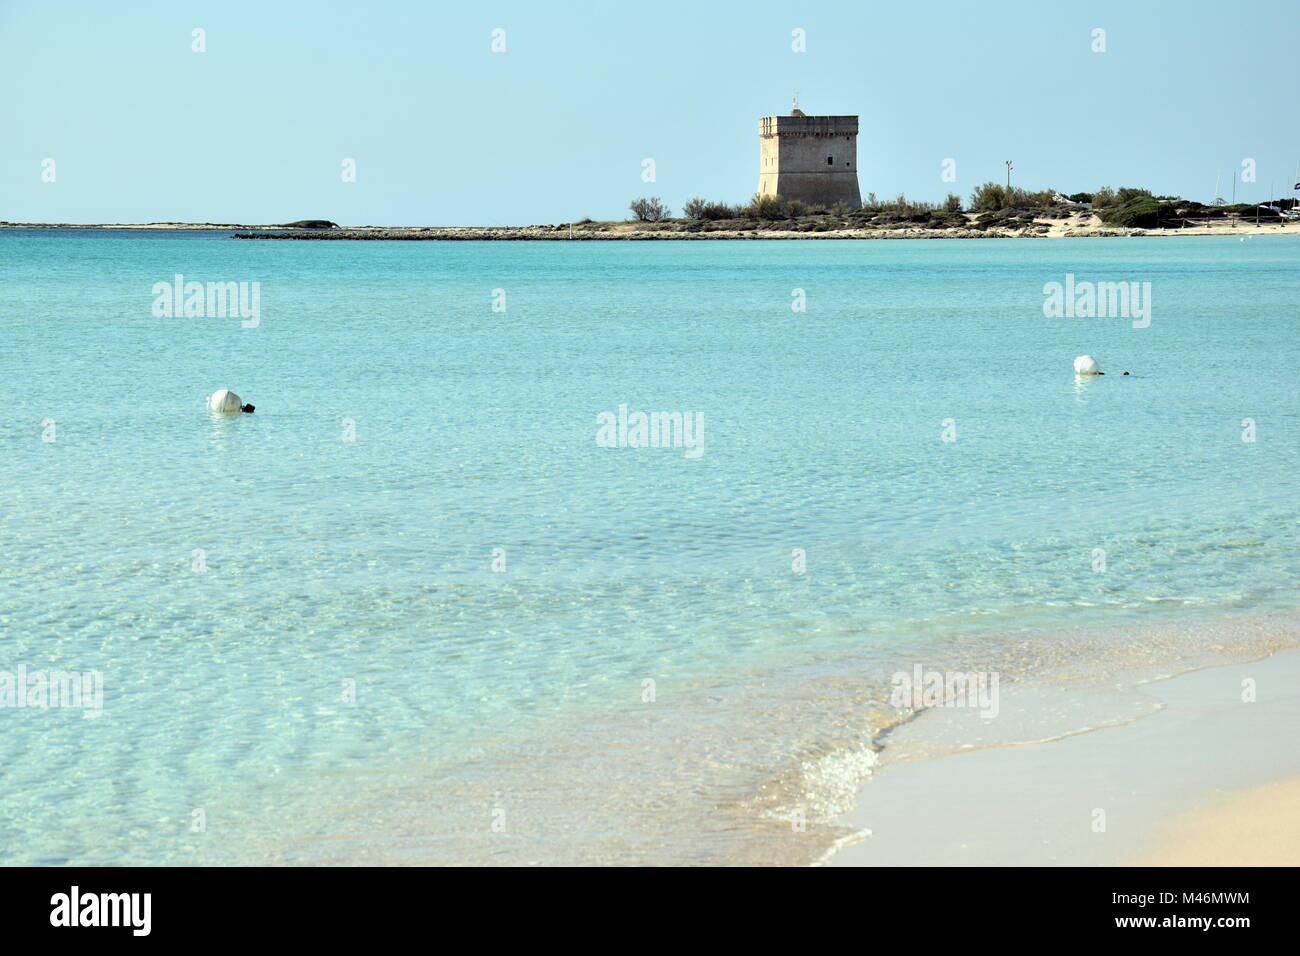 beach near Porto Cesareo a town on the Ionian sea in Salento, Apulia region, Italy Stock Photo